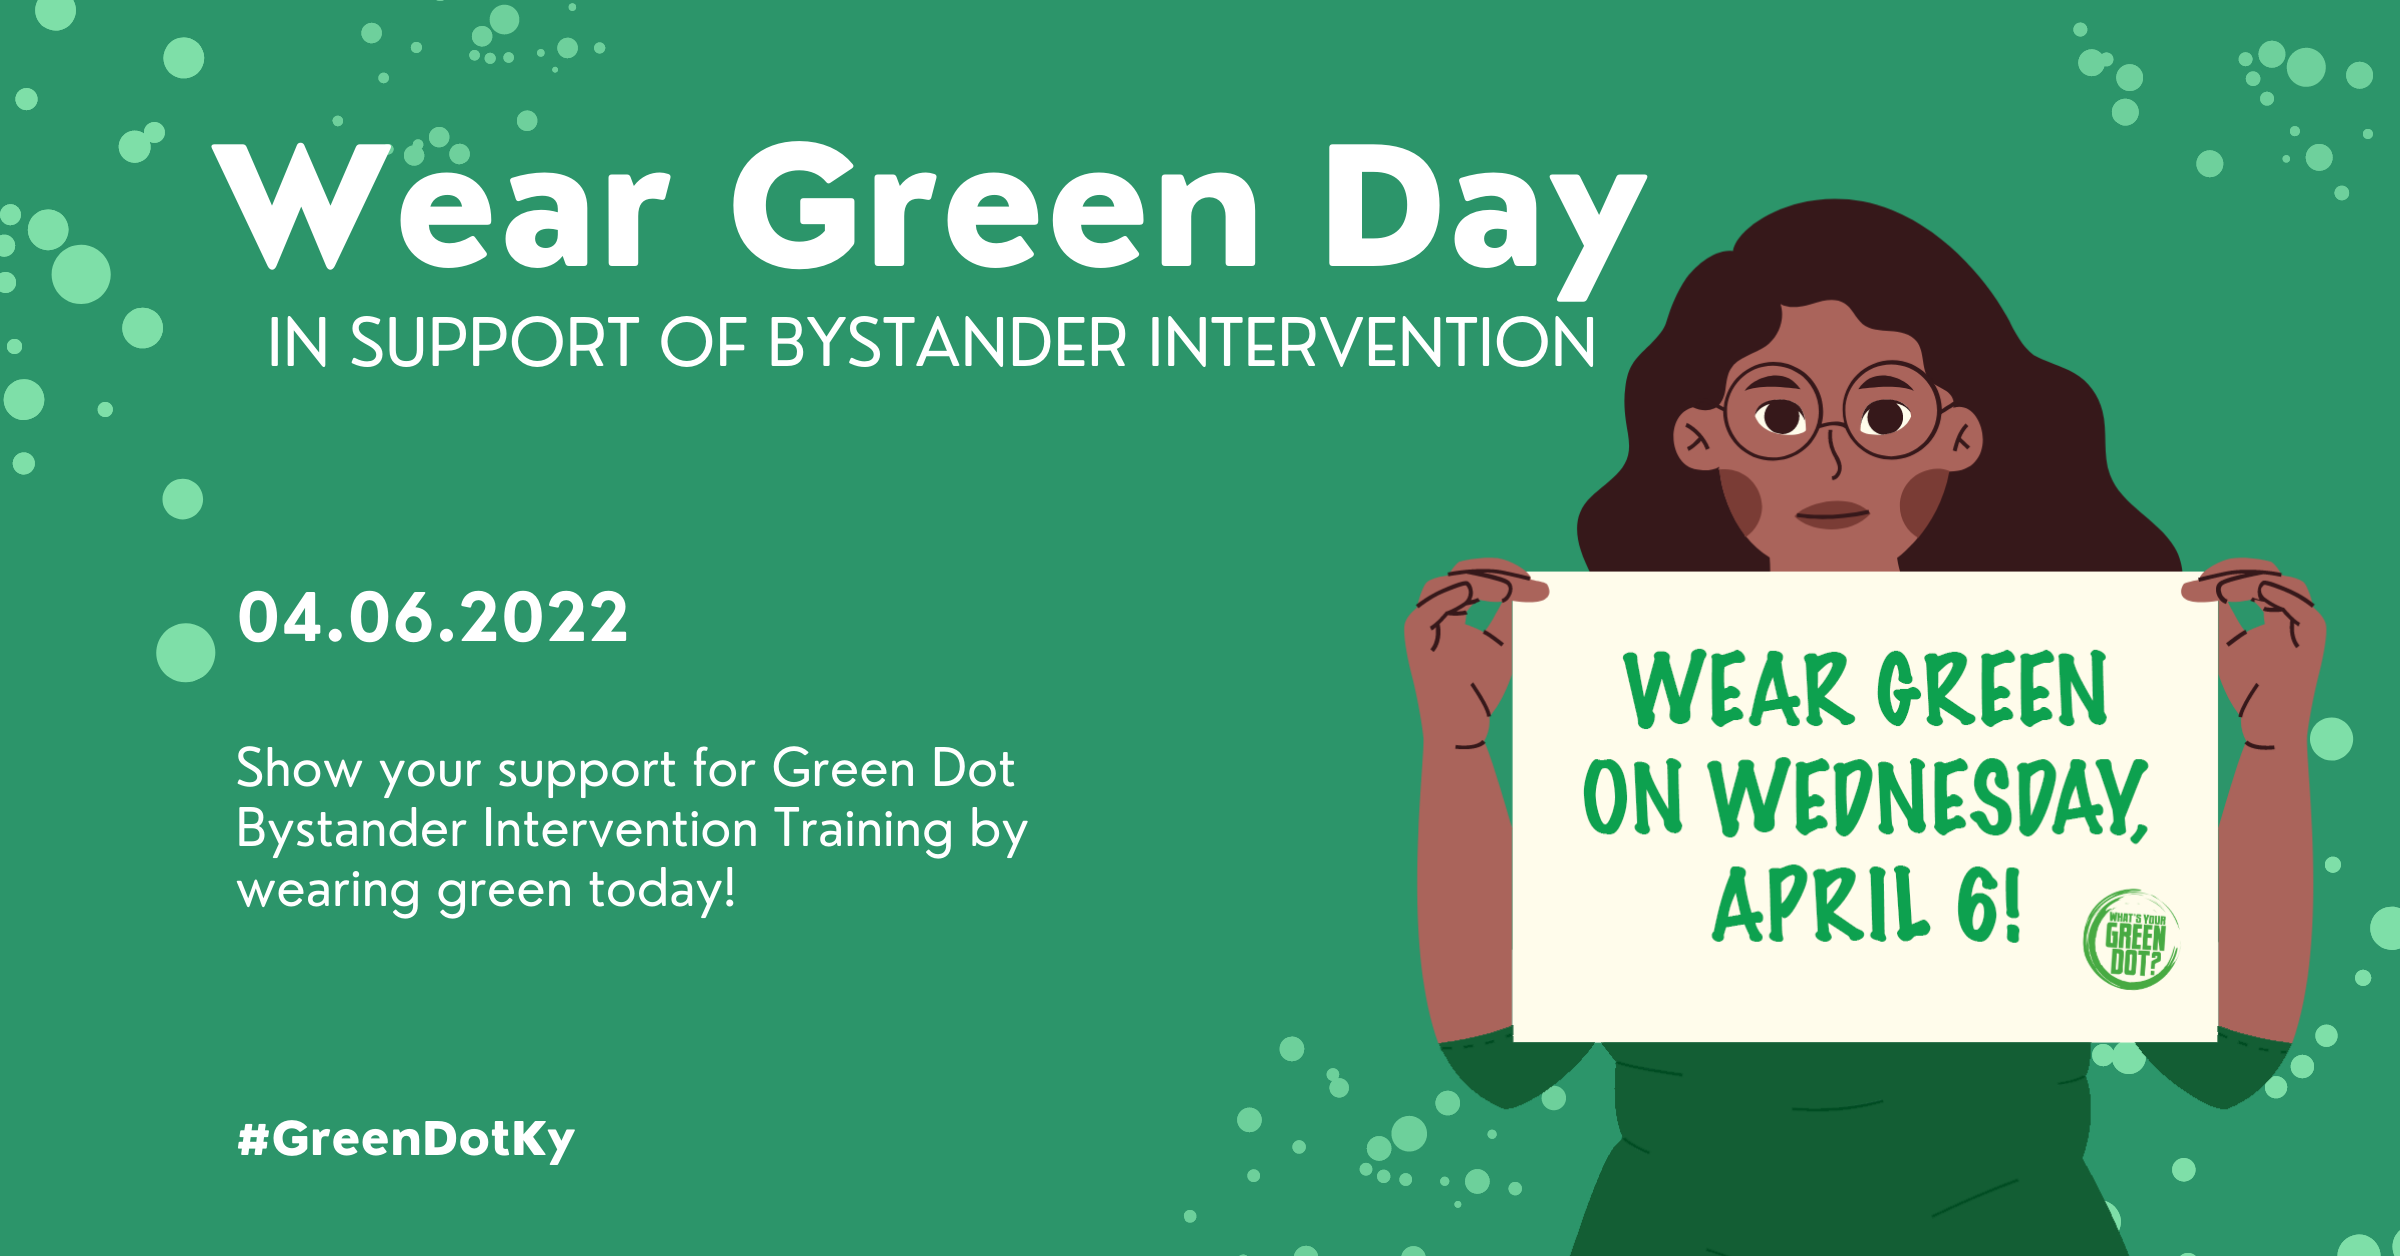 April 6, Wear Green Day